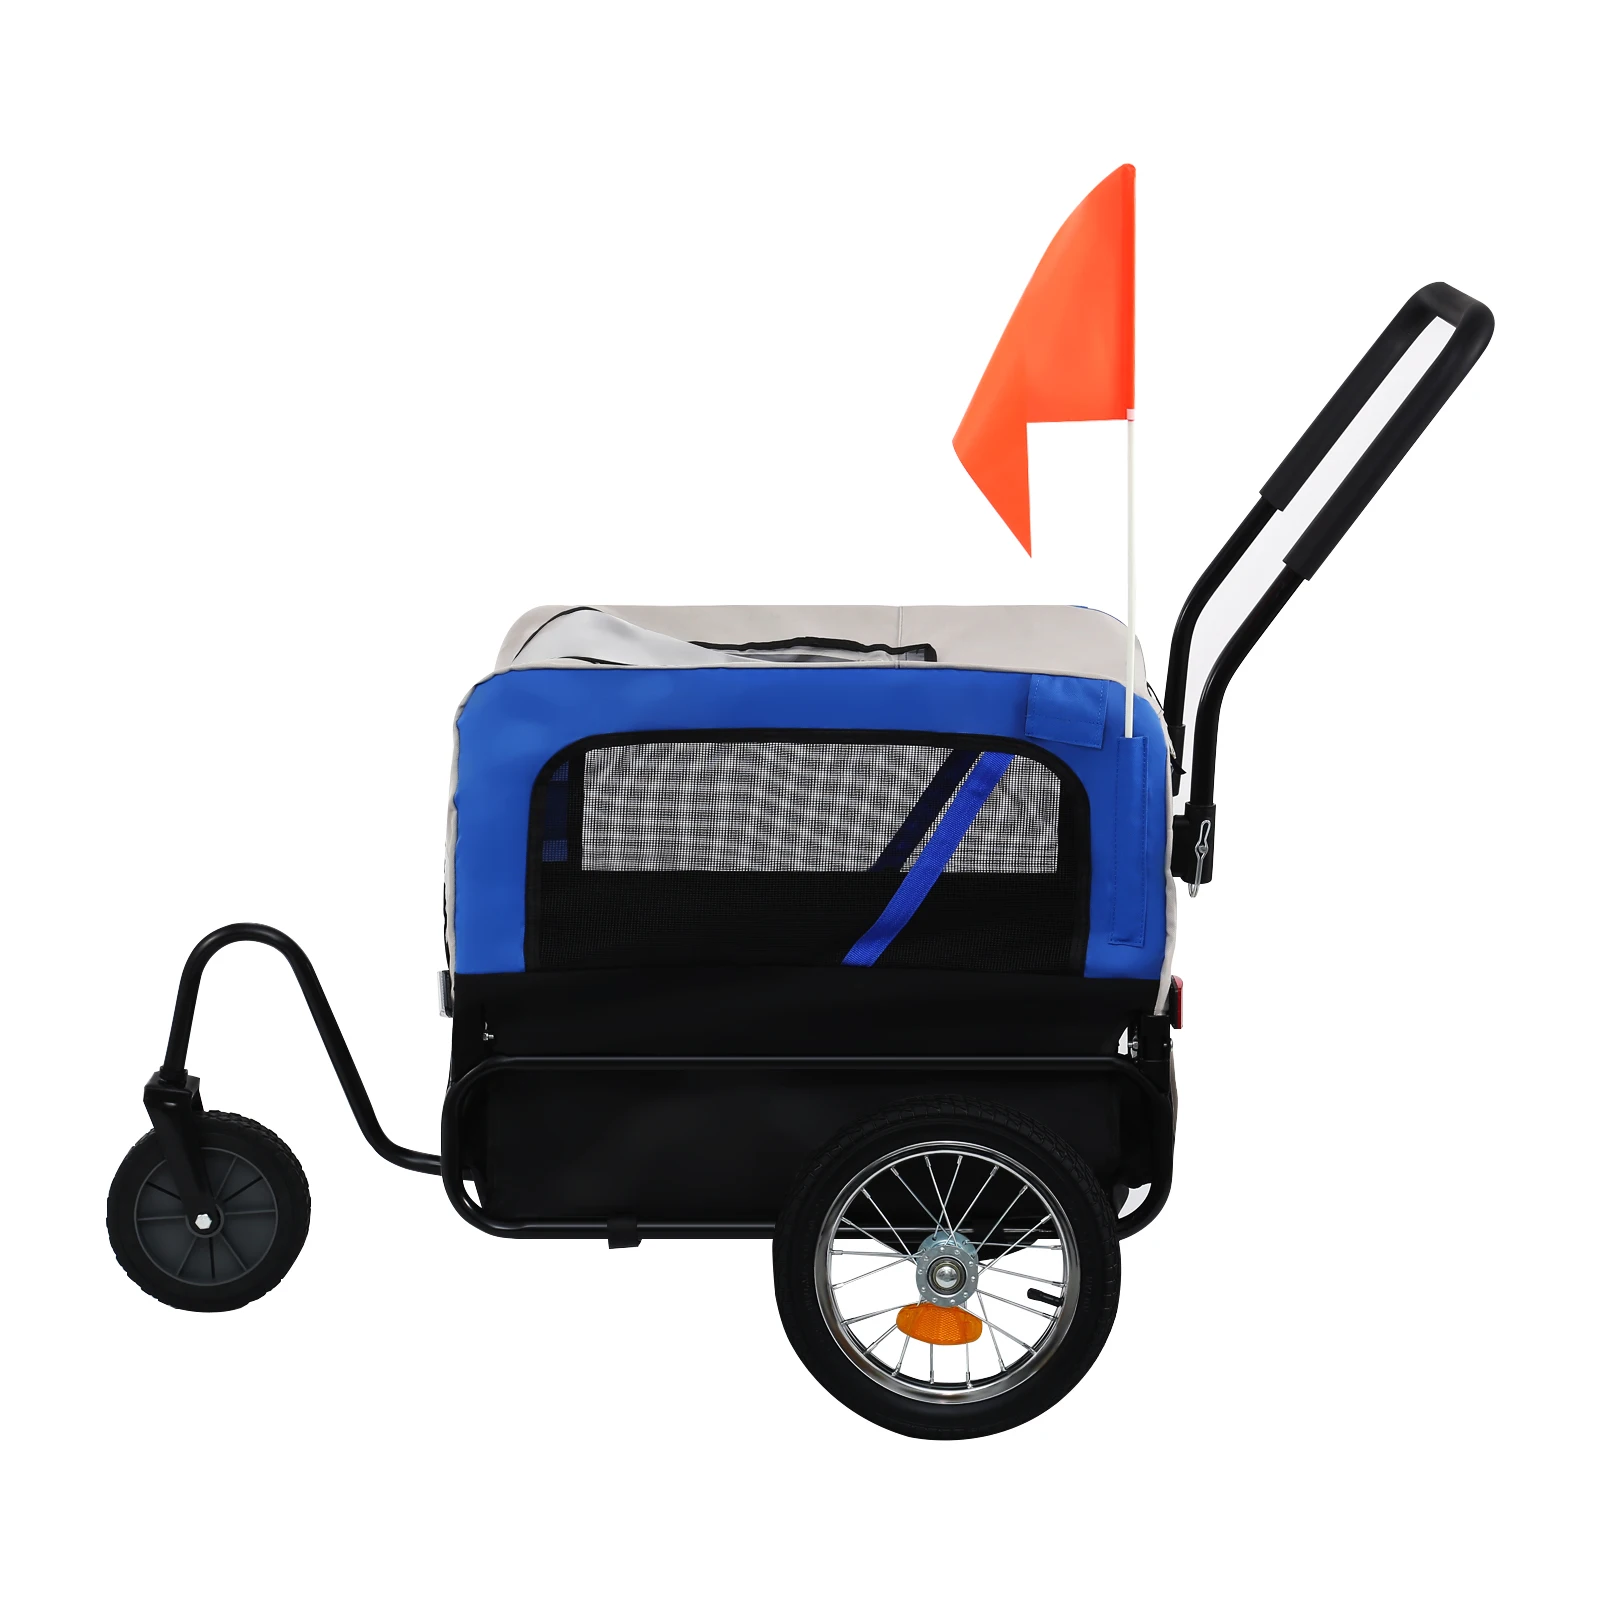 Yonntech 2 in 1 Convertible Pet Bike Trailer & Jogging Stroller Cargo Trolley Storage Cart